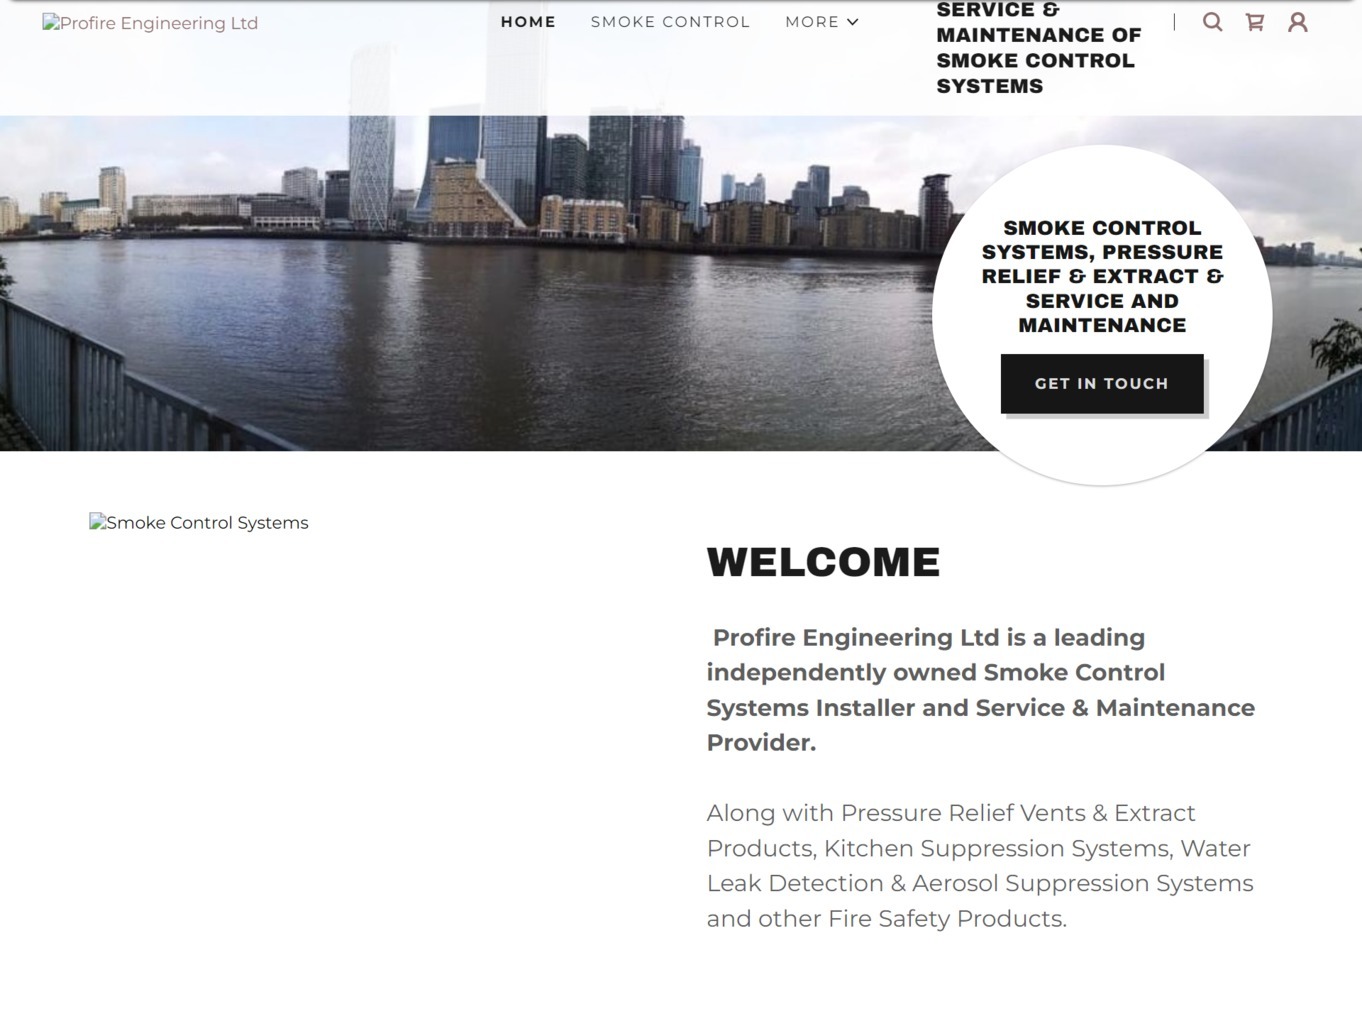 The previous website belonging to Profire Engineering Ltd